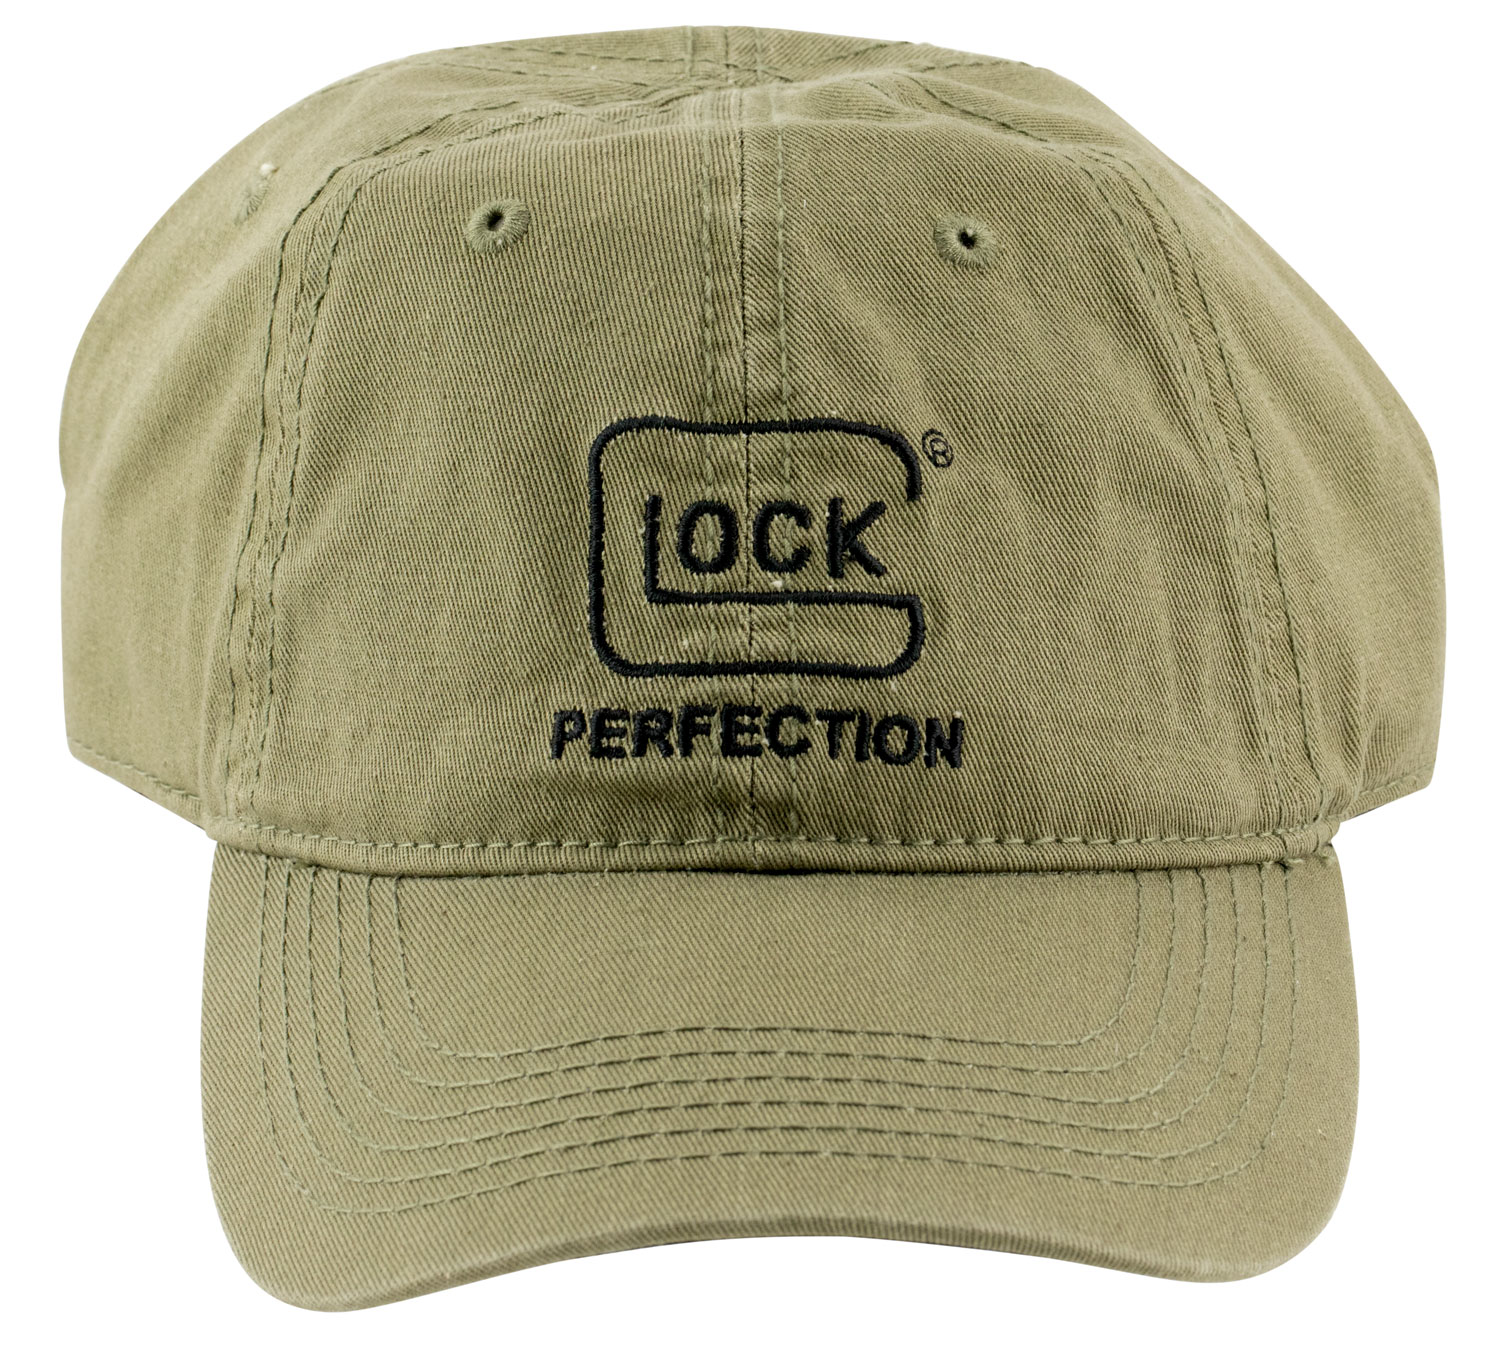 GLOCK OEM OD PERFECTION CHINO HAT